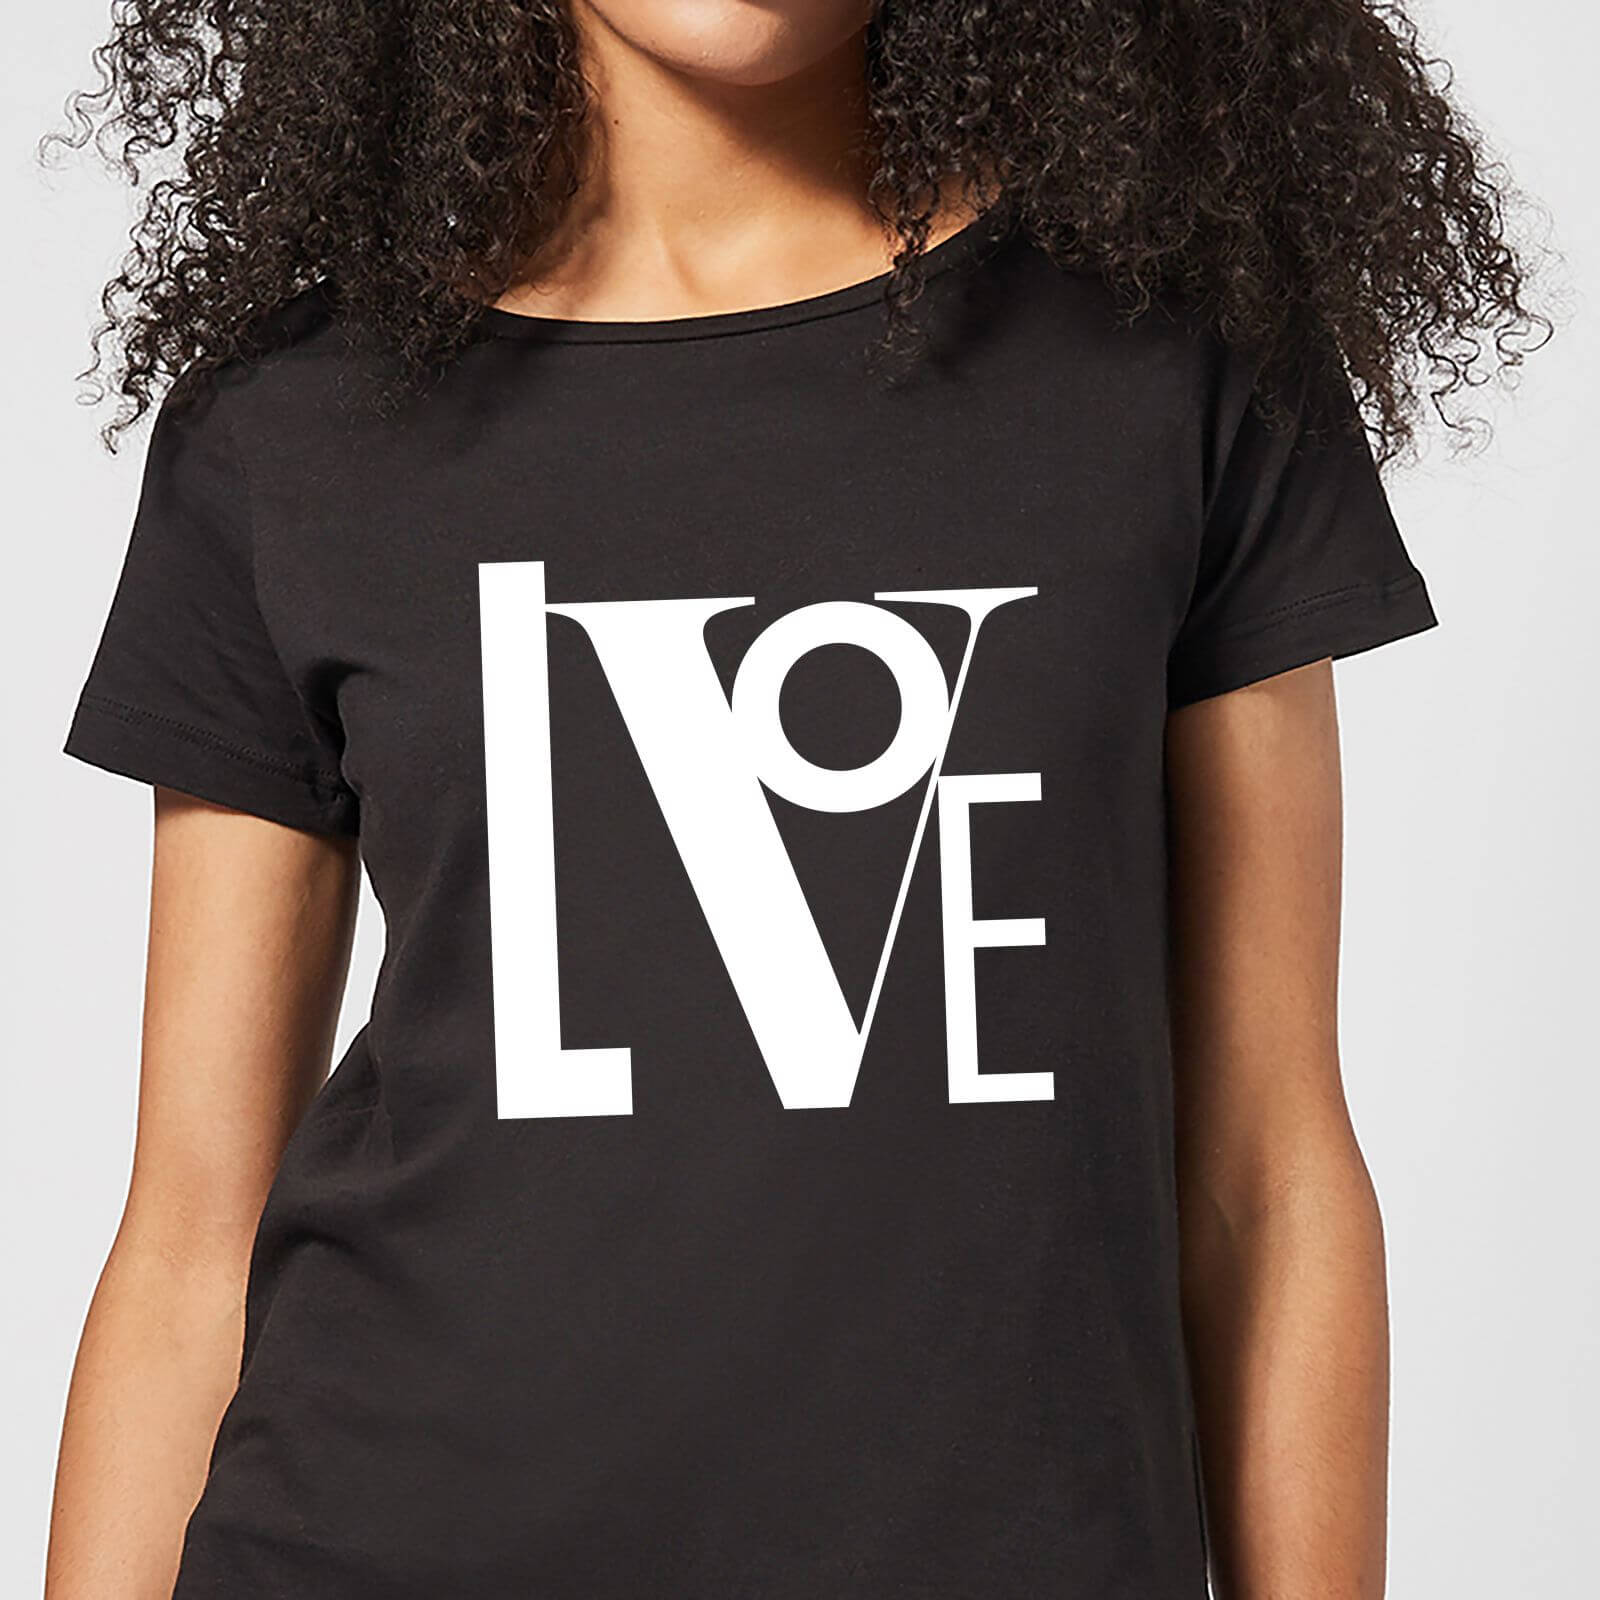 Love Women's T-Shirt - Black - S - Black